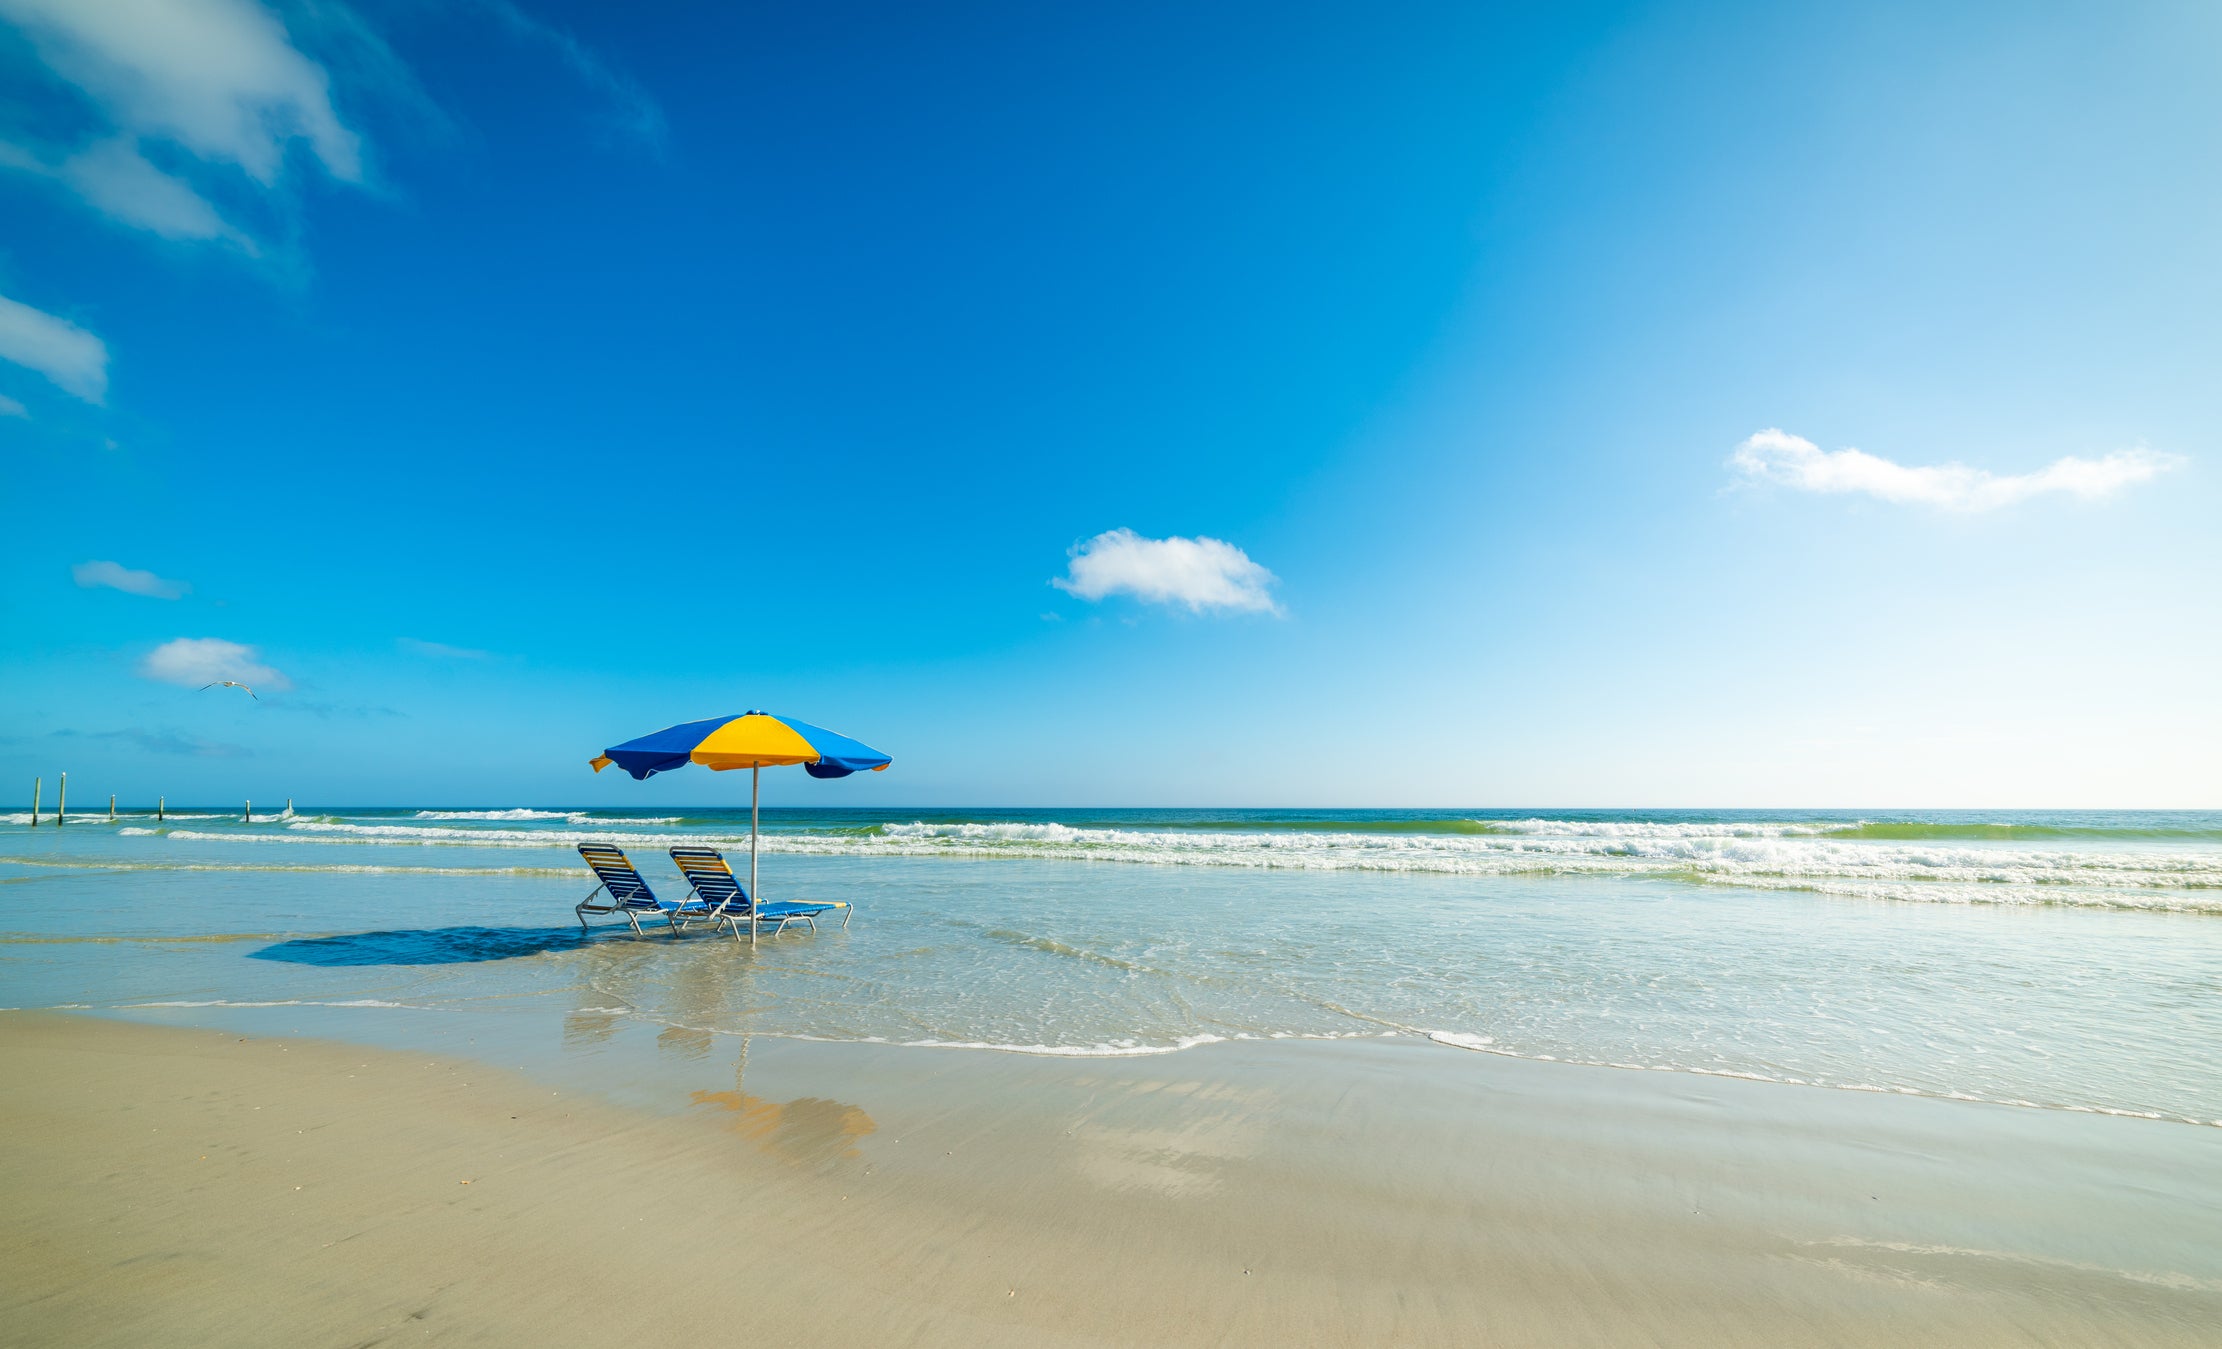 Daytona is among the many wonderful beaches you’ll find across Florida